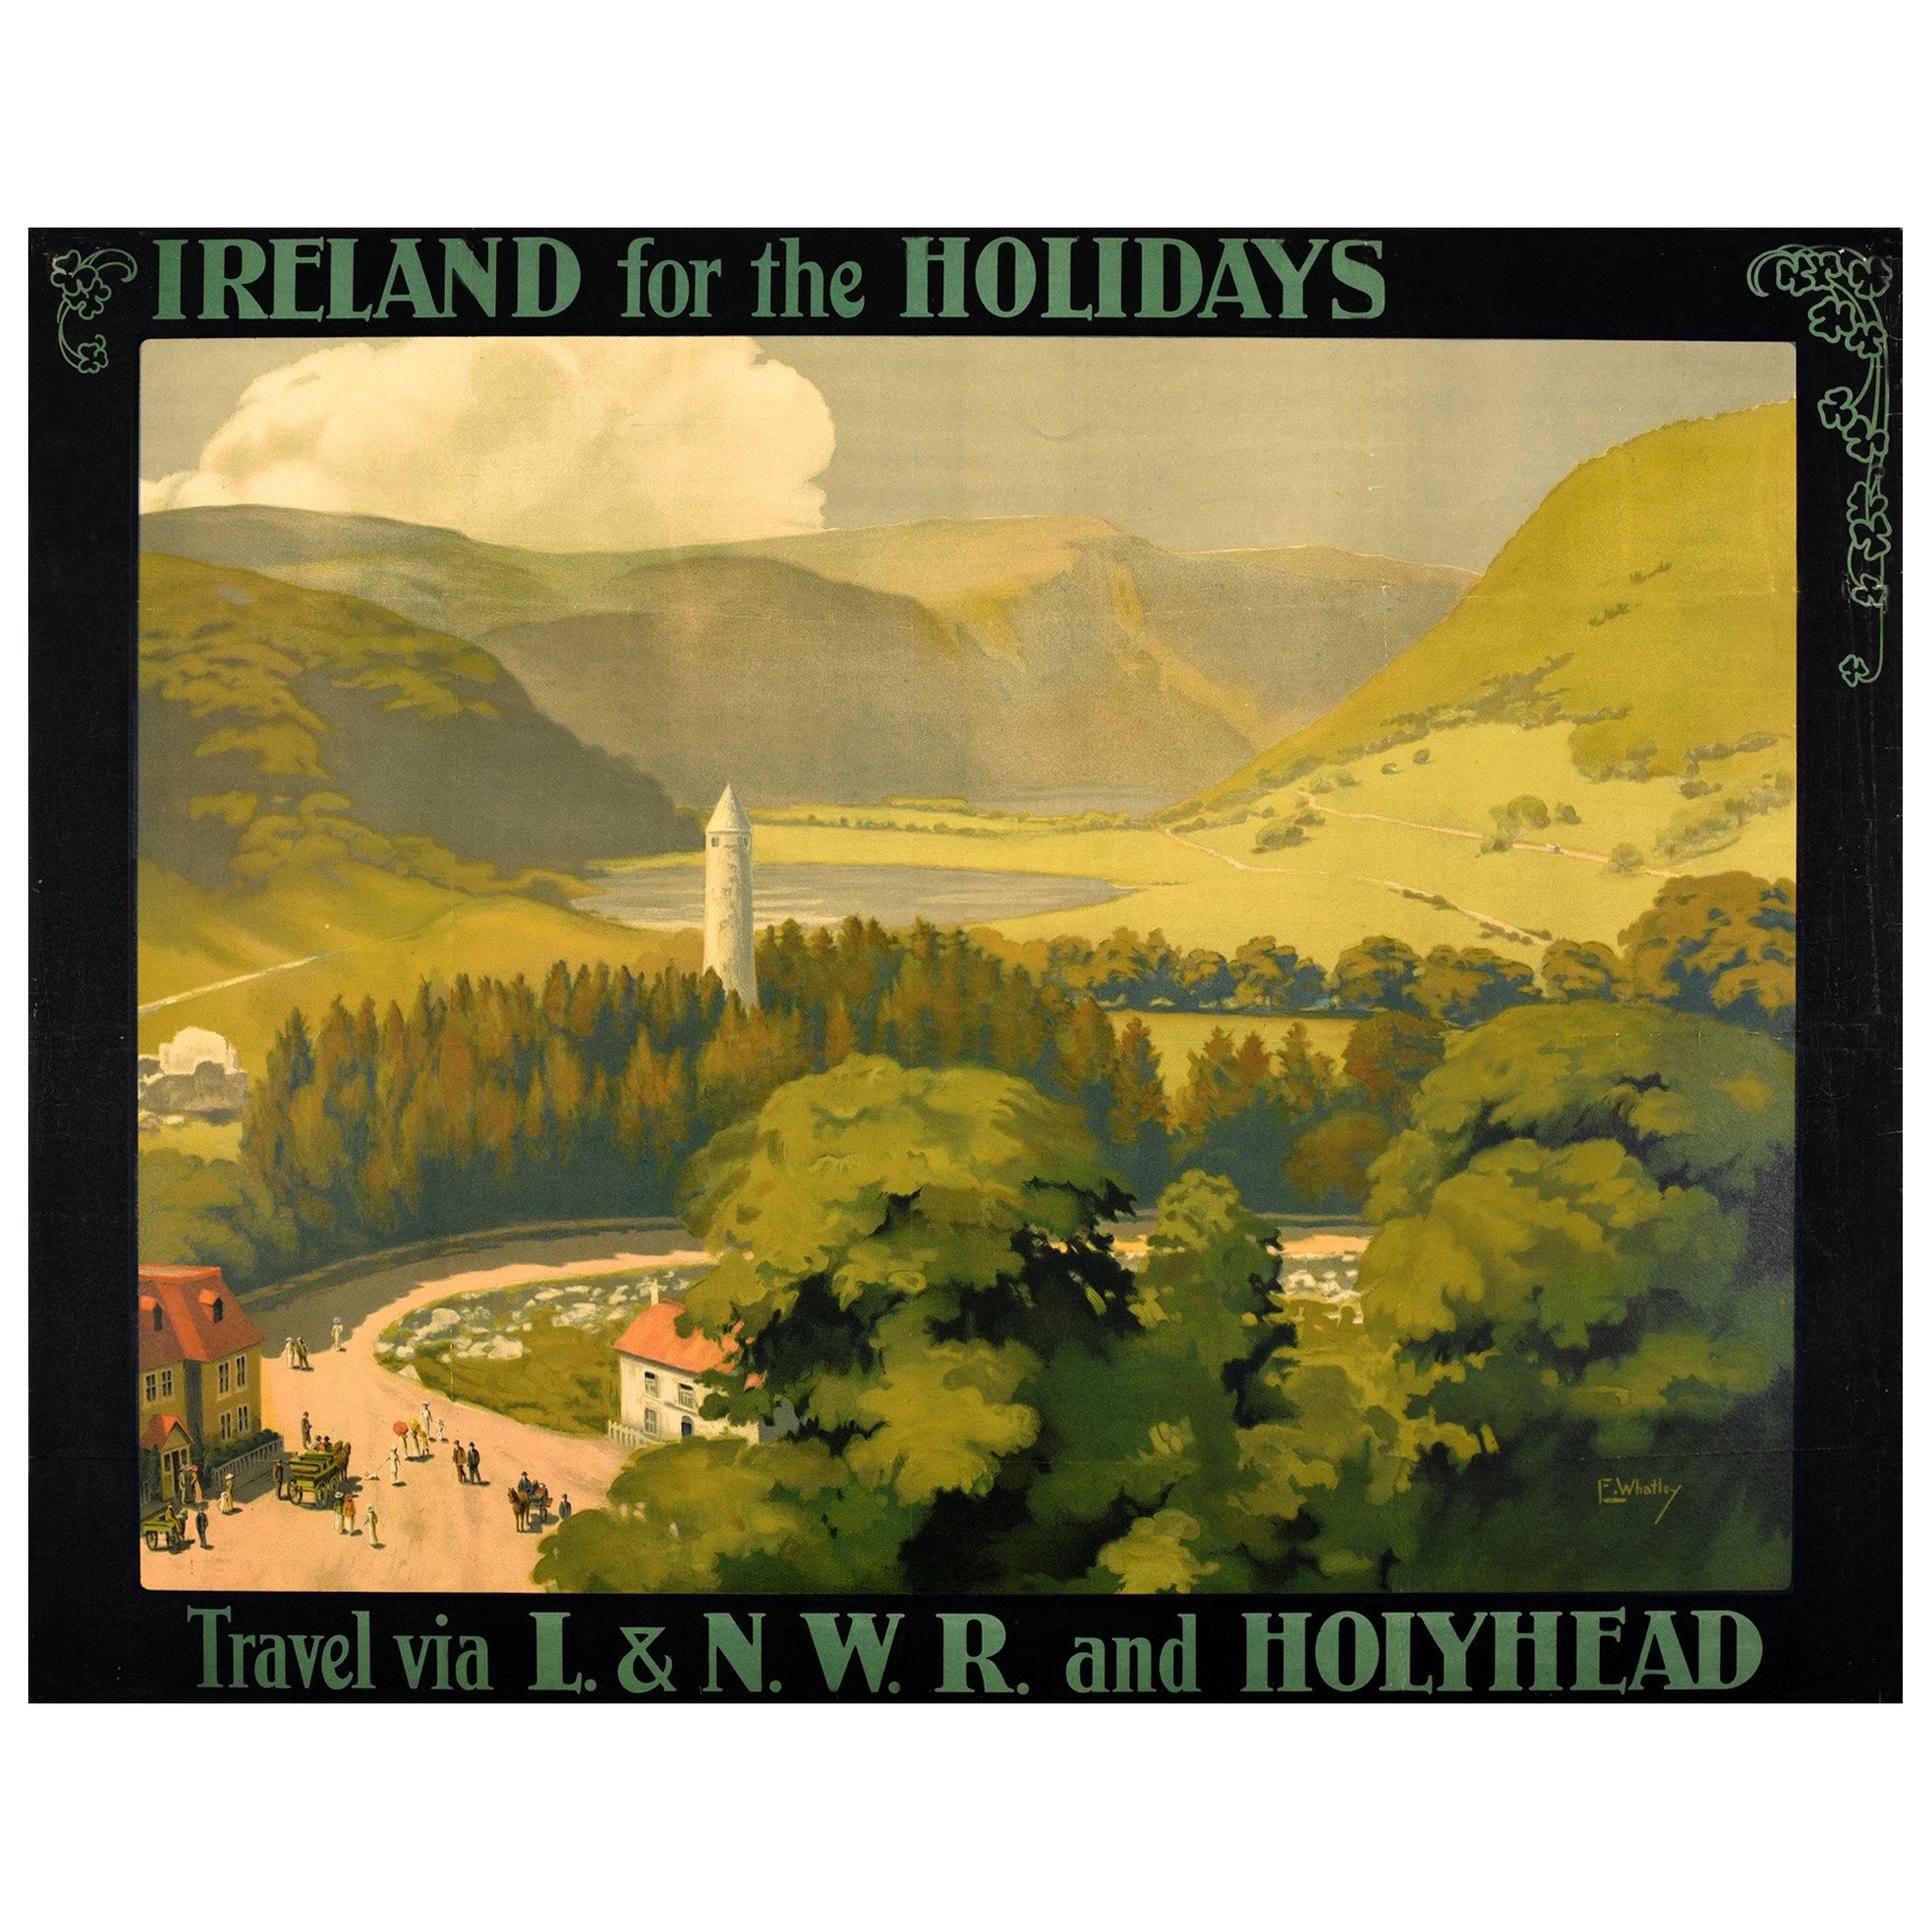 Original Antique Railway Travel Poster Ireland for the Holidays LNWR & Holyhead